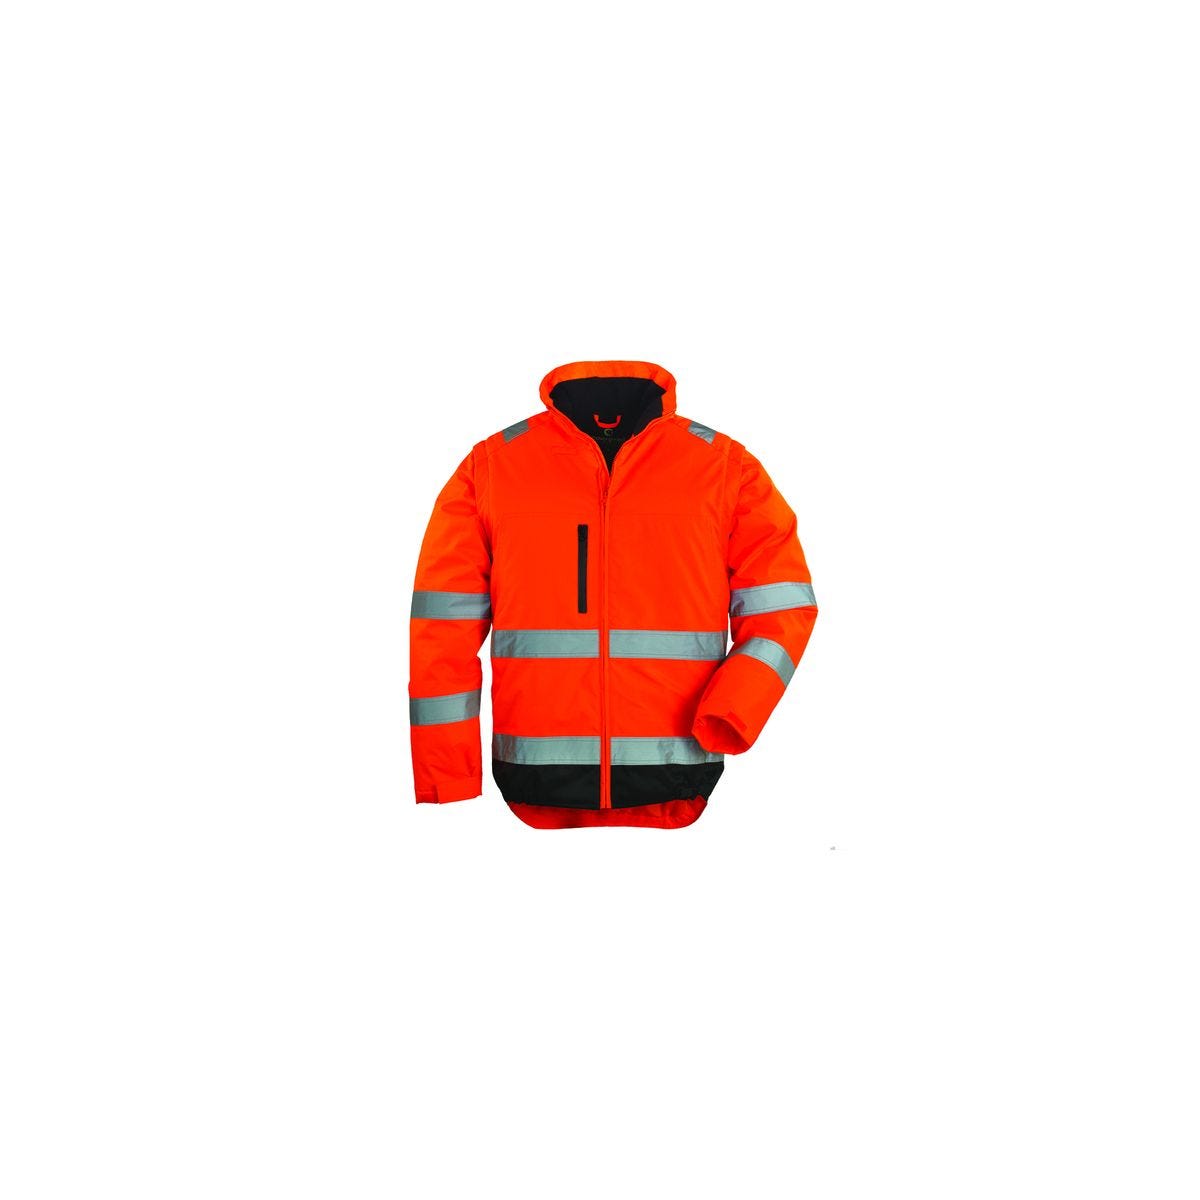 HI-WAY Xtra Veste 2/1, orange HV, Polyester Oxford 300D - COVERGUARD - Taille M 0